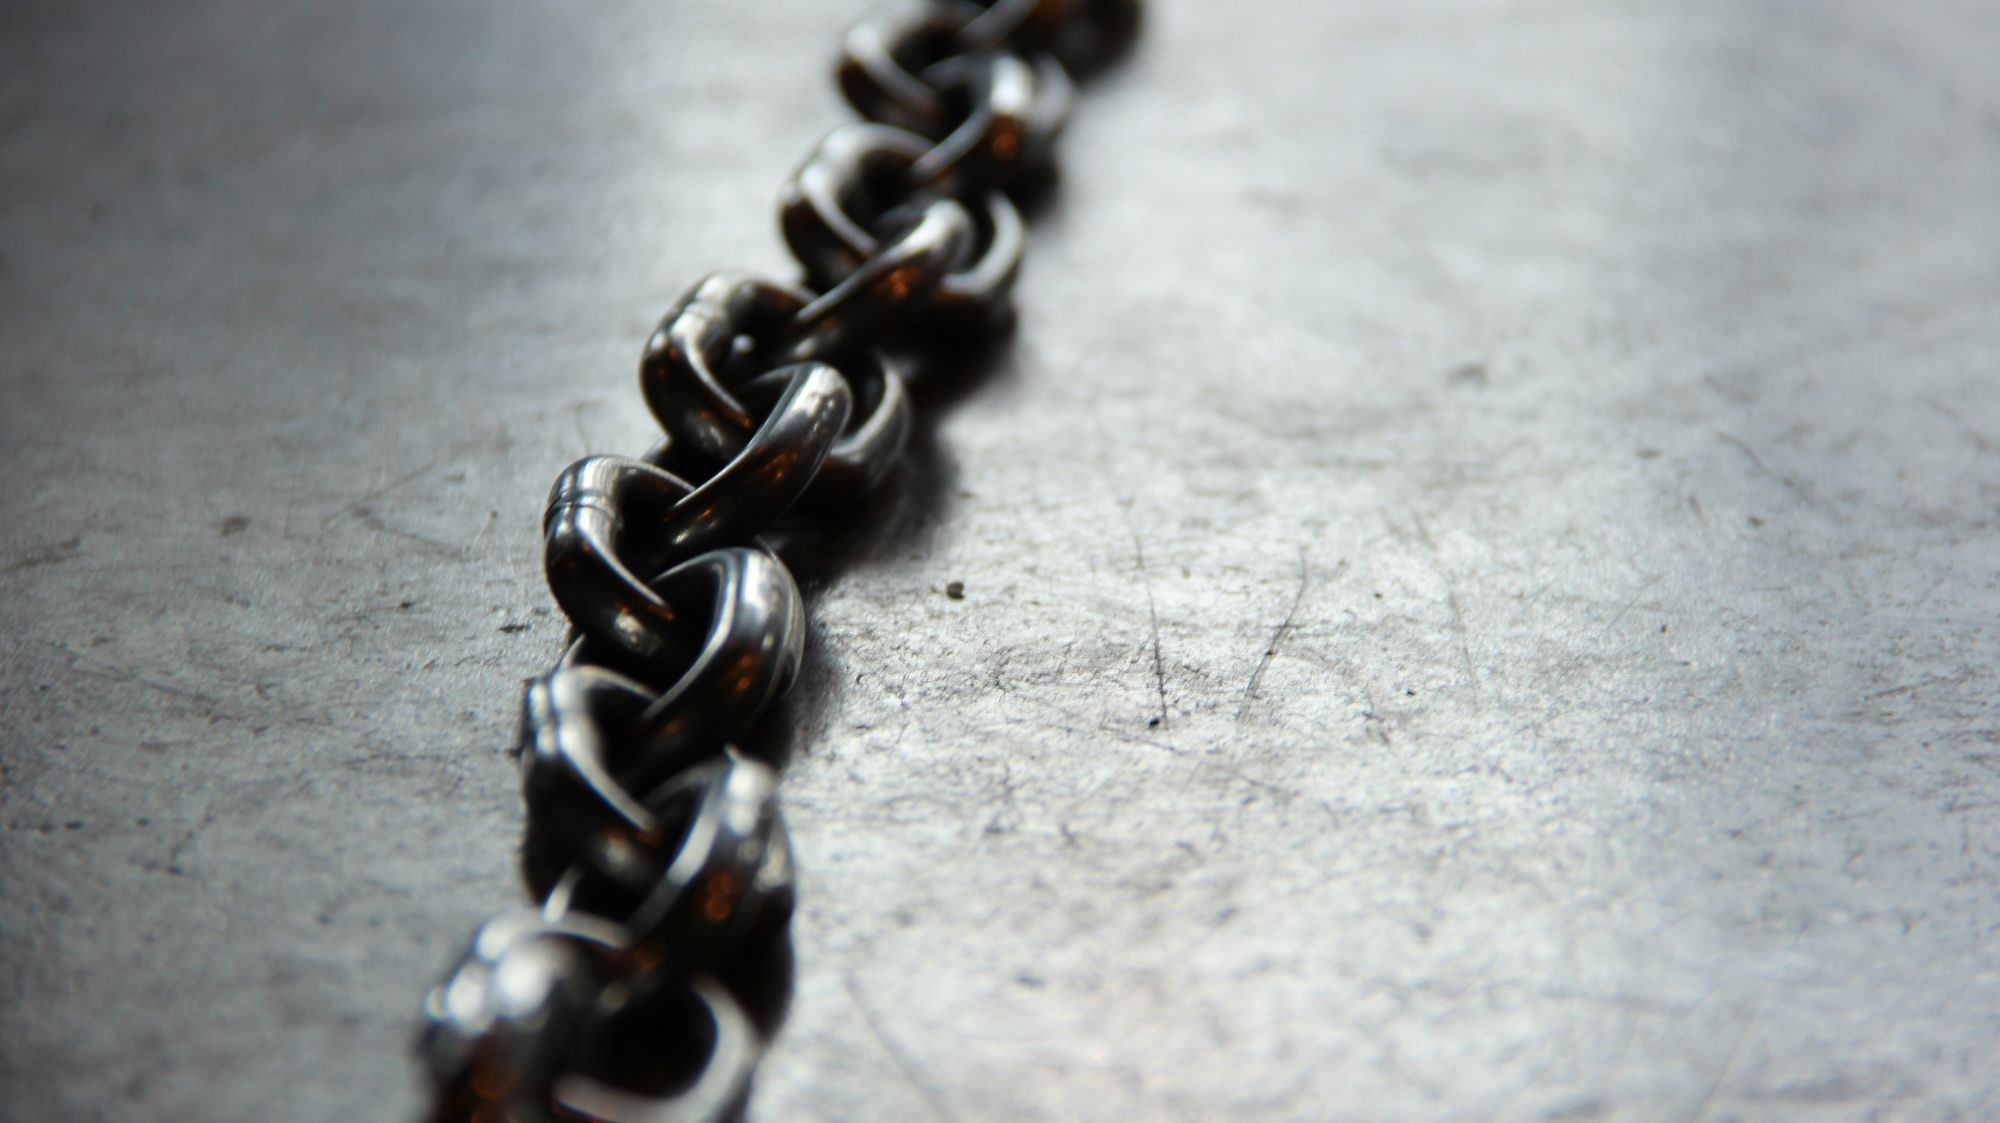 Iron chain laying across the floor.